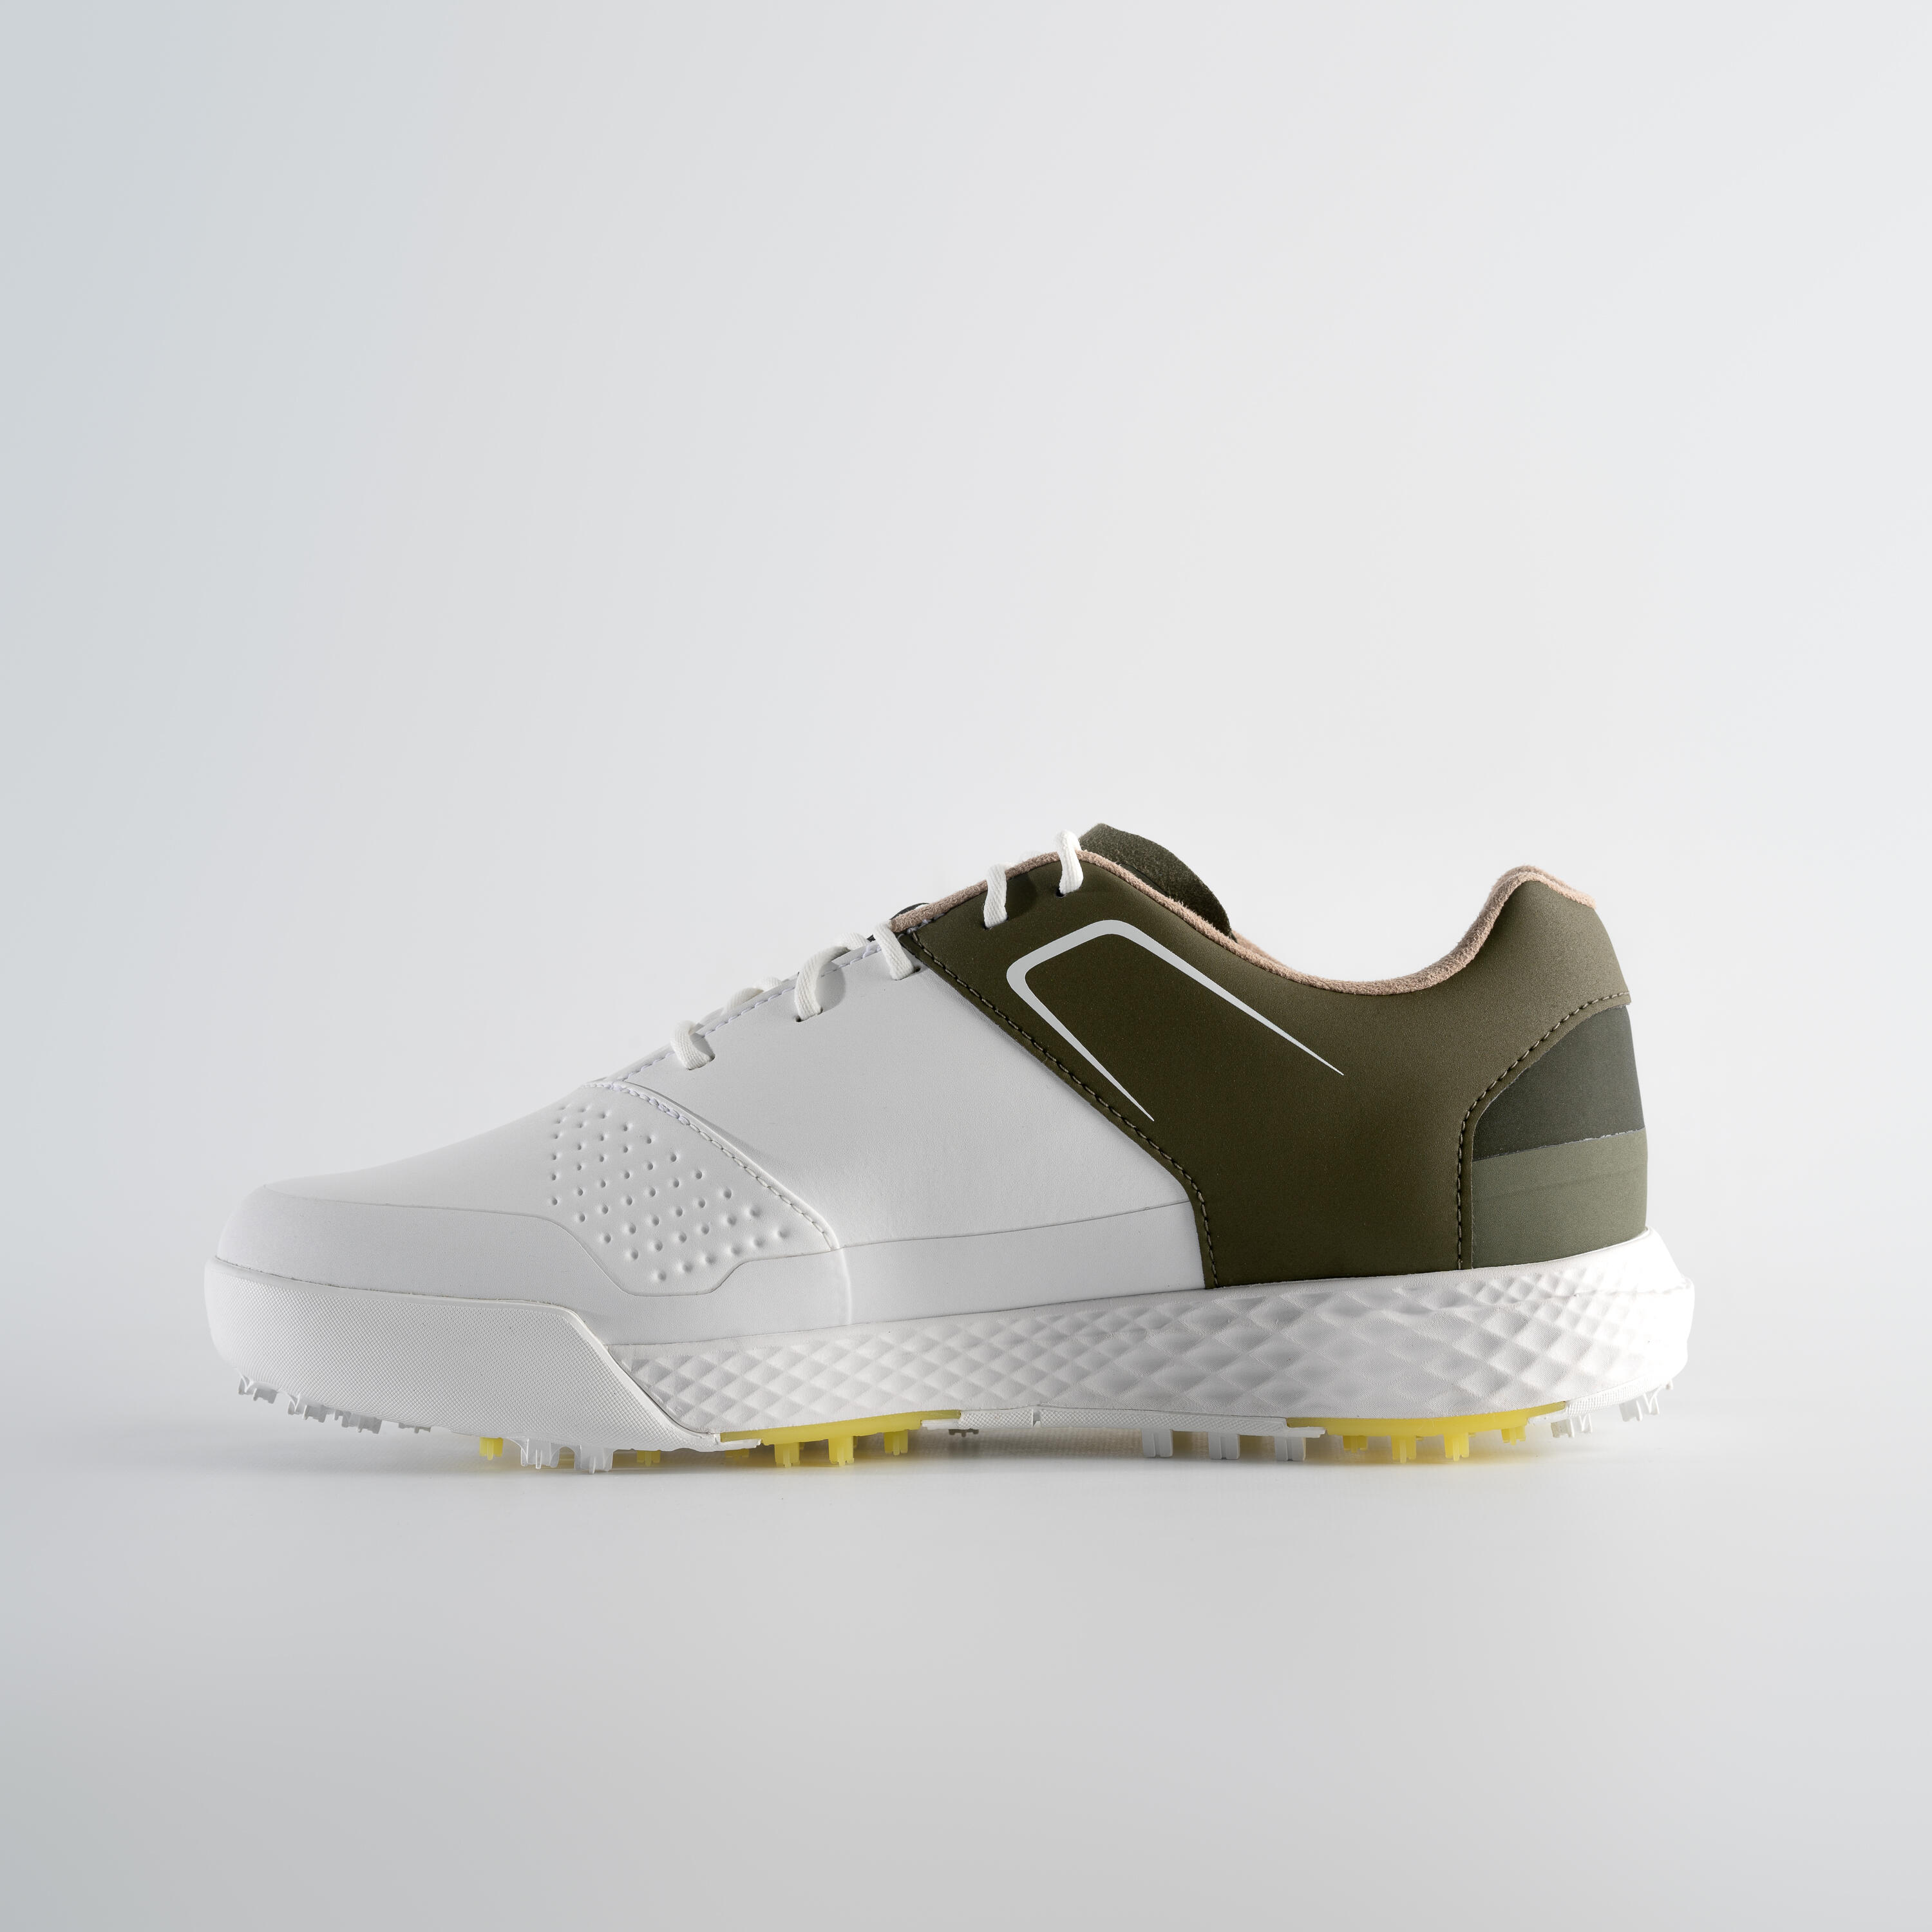 Men’s golf waterproof grip shoes - white and khaki 3/7